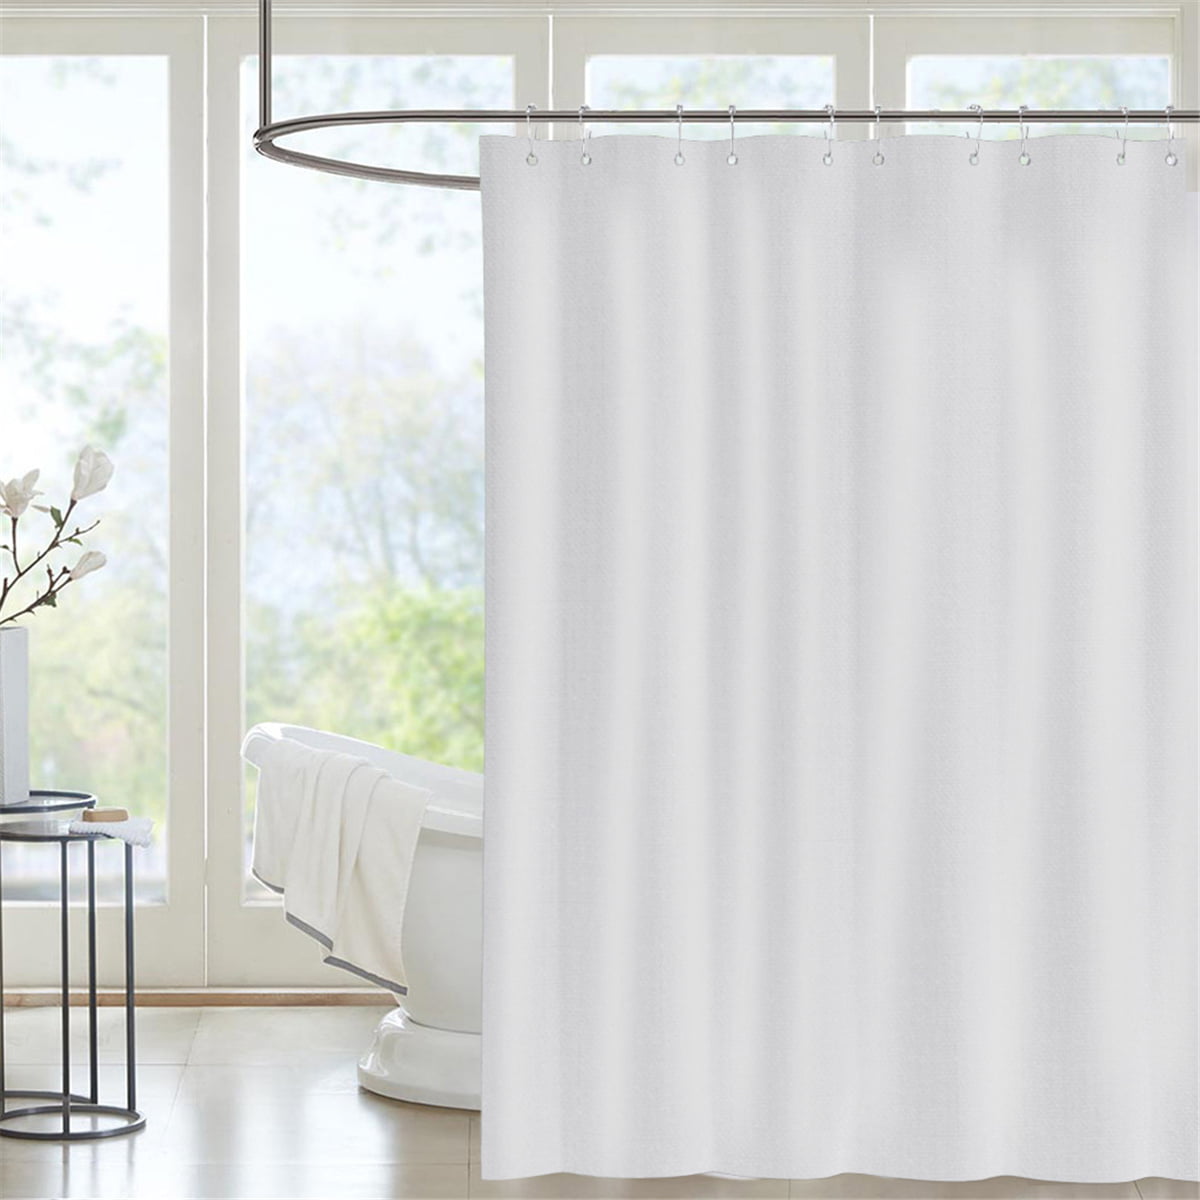 Details about   Transparent Bath Curtains Waterproof Shower Curtains Liner Home Bathroom Mildew 